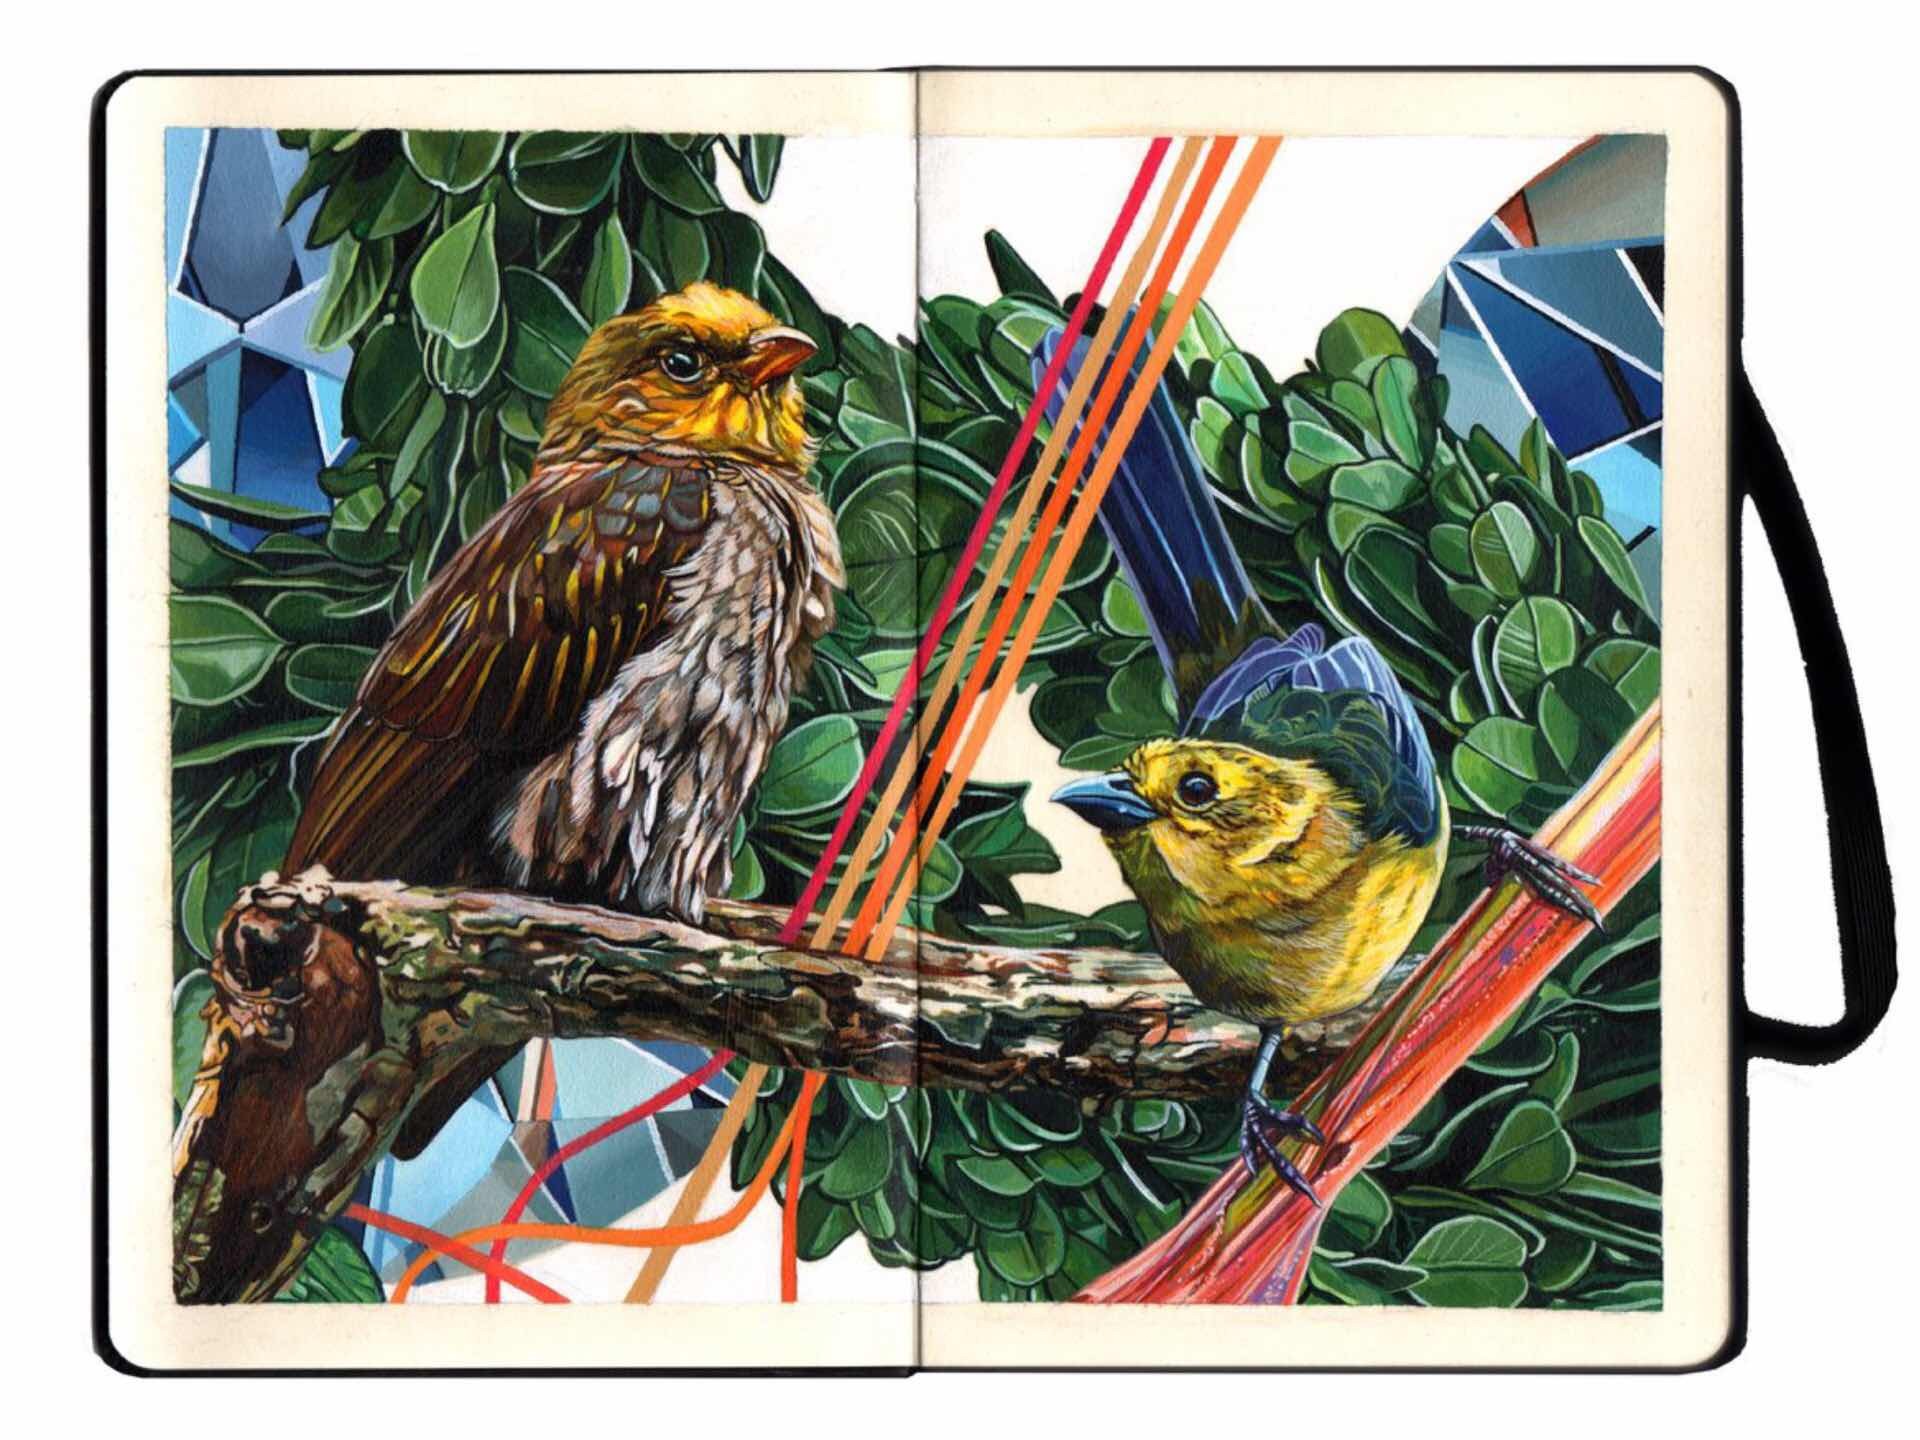 Artwork: "Endangered Birds #180a" by Juan Travieso